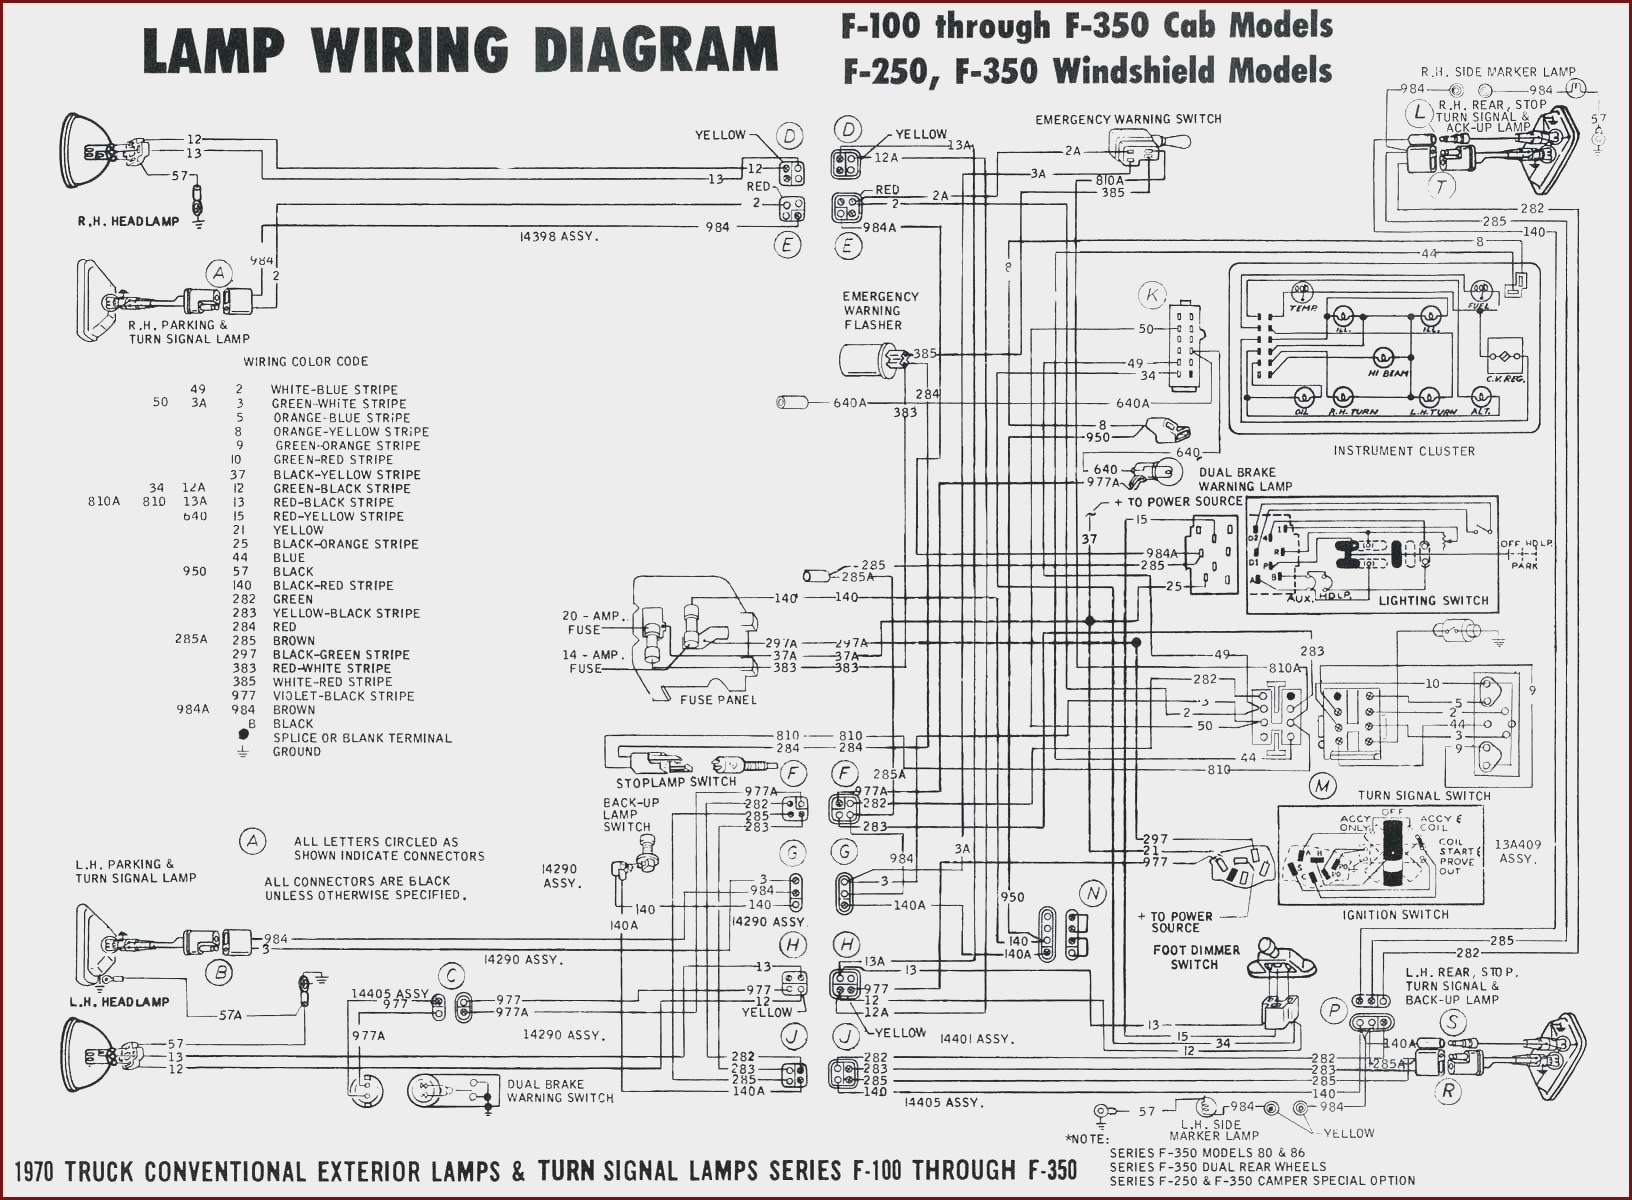 Basic Turn Signal Wiring Diagram Basic Car Audio Wiring Diagram at Manuals Library Of Basic Turn Signal Wiring Diagram